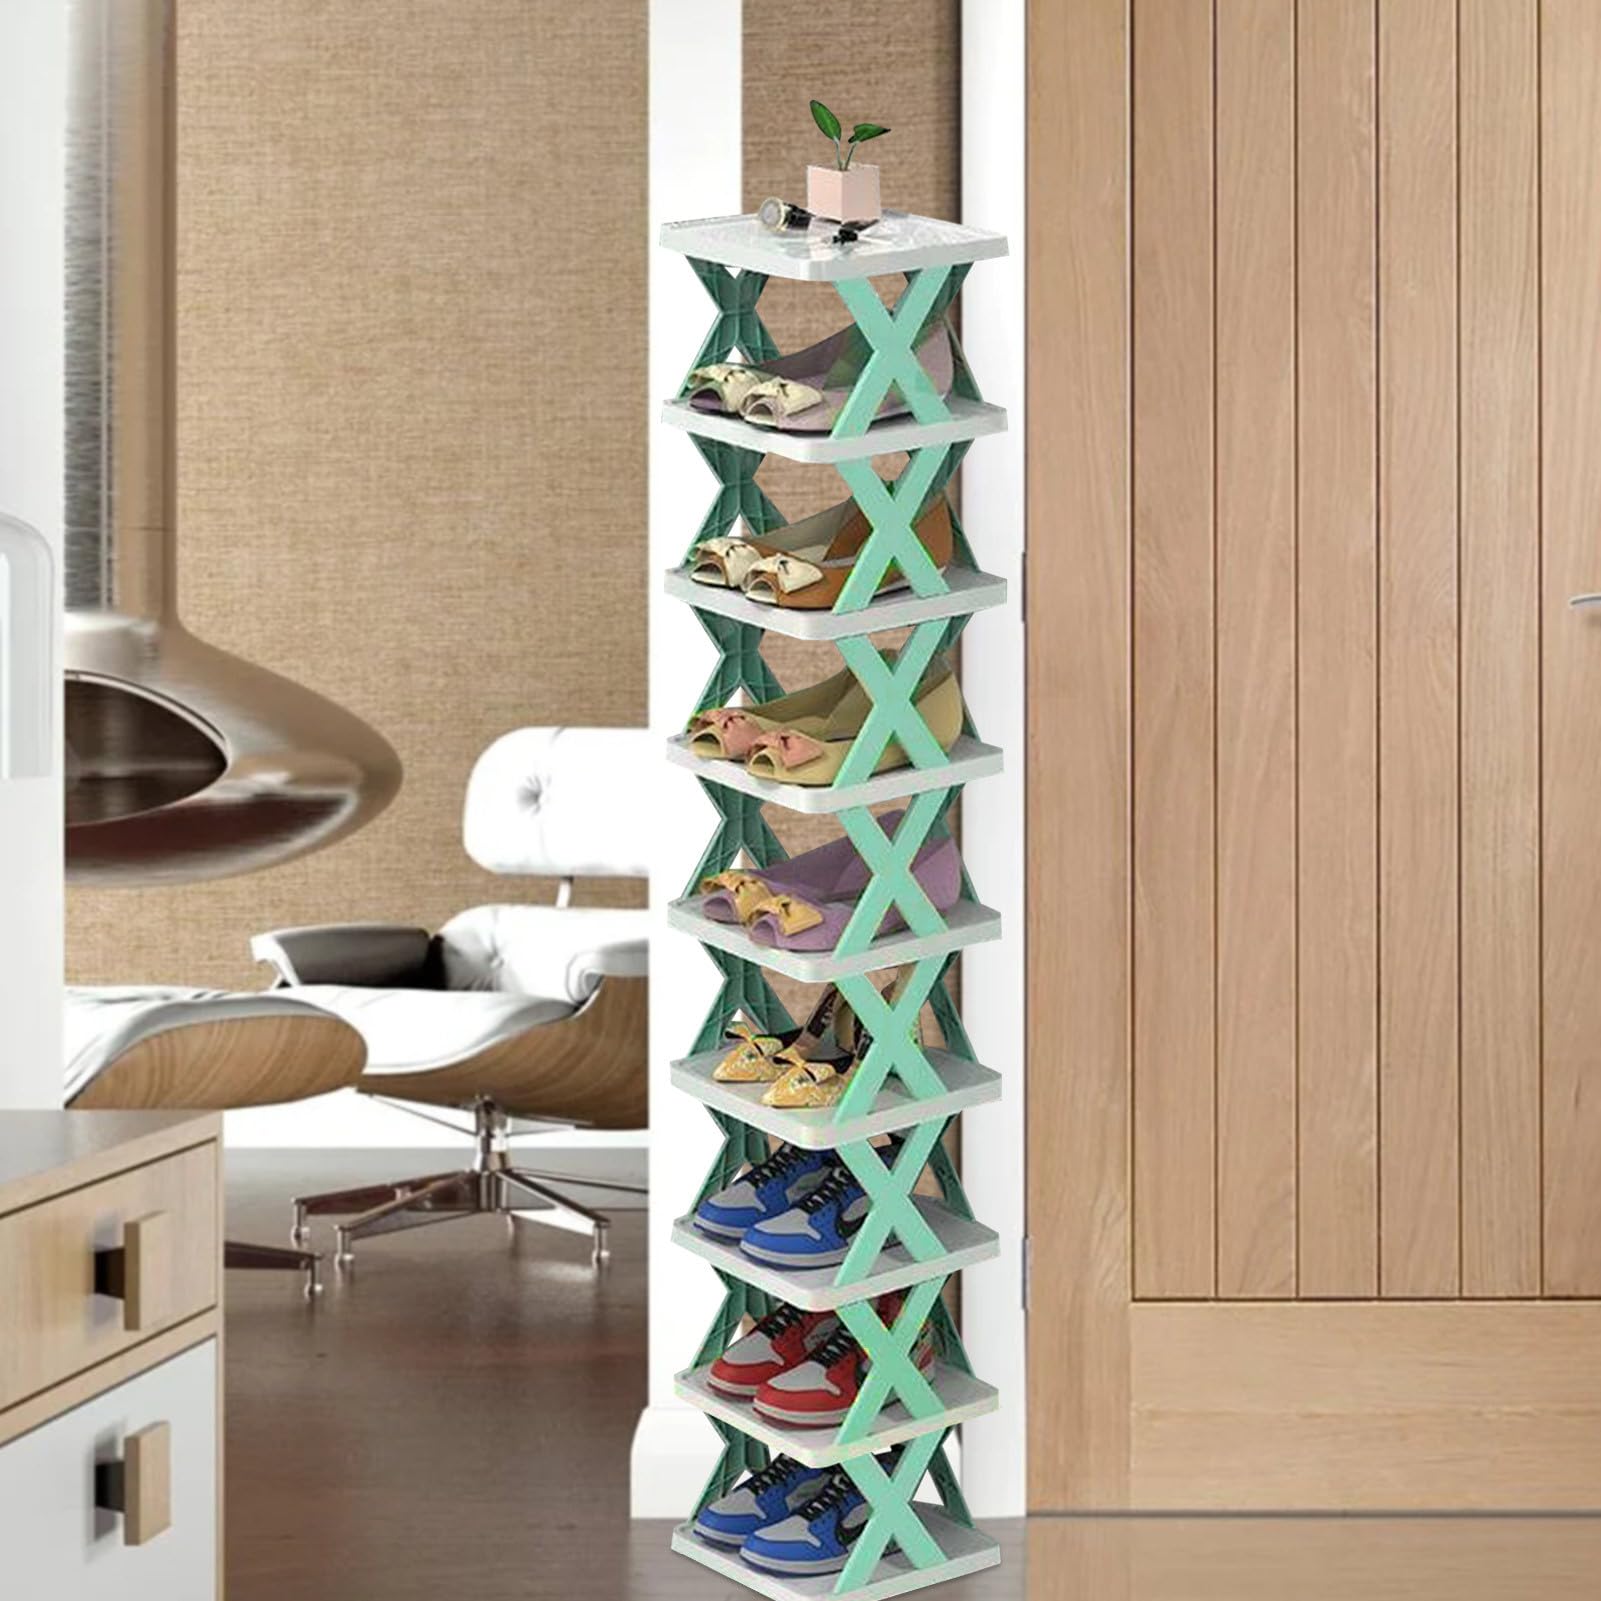 Doefo 9 Layers Foldable Shoe Rack, Compact Shoe Rack Storage- Assemble Detachable Shoe Shelves Shoe Cabinet - Creative Tower Shelf Storage for Entryway